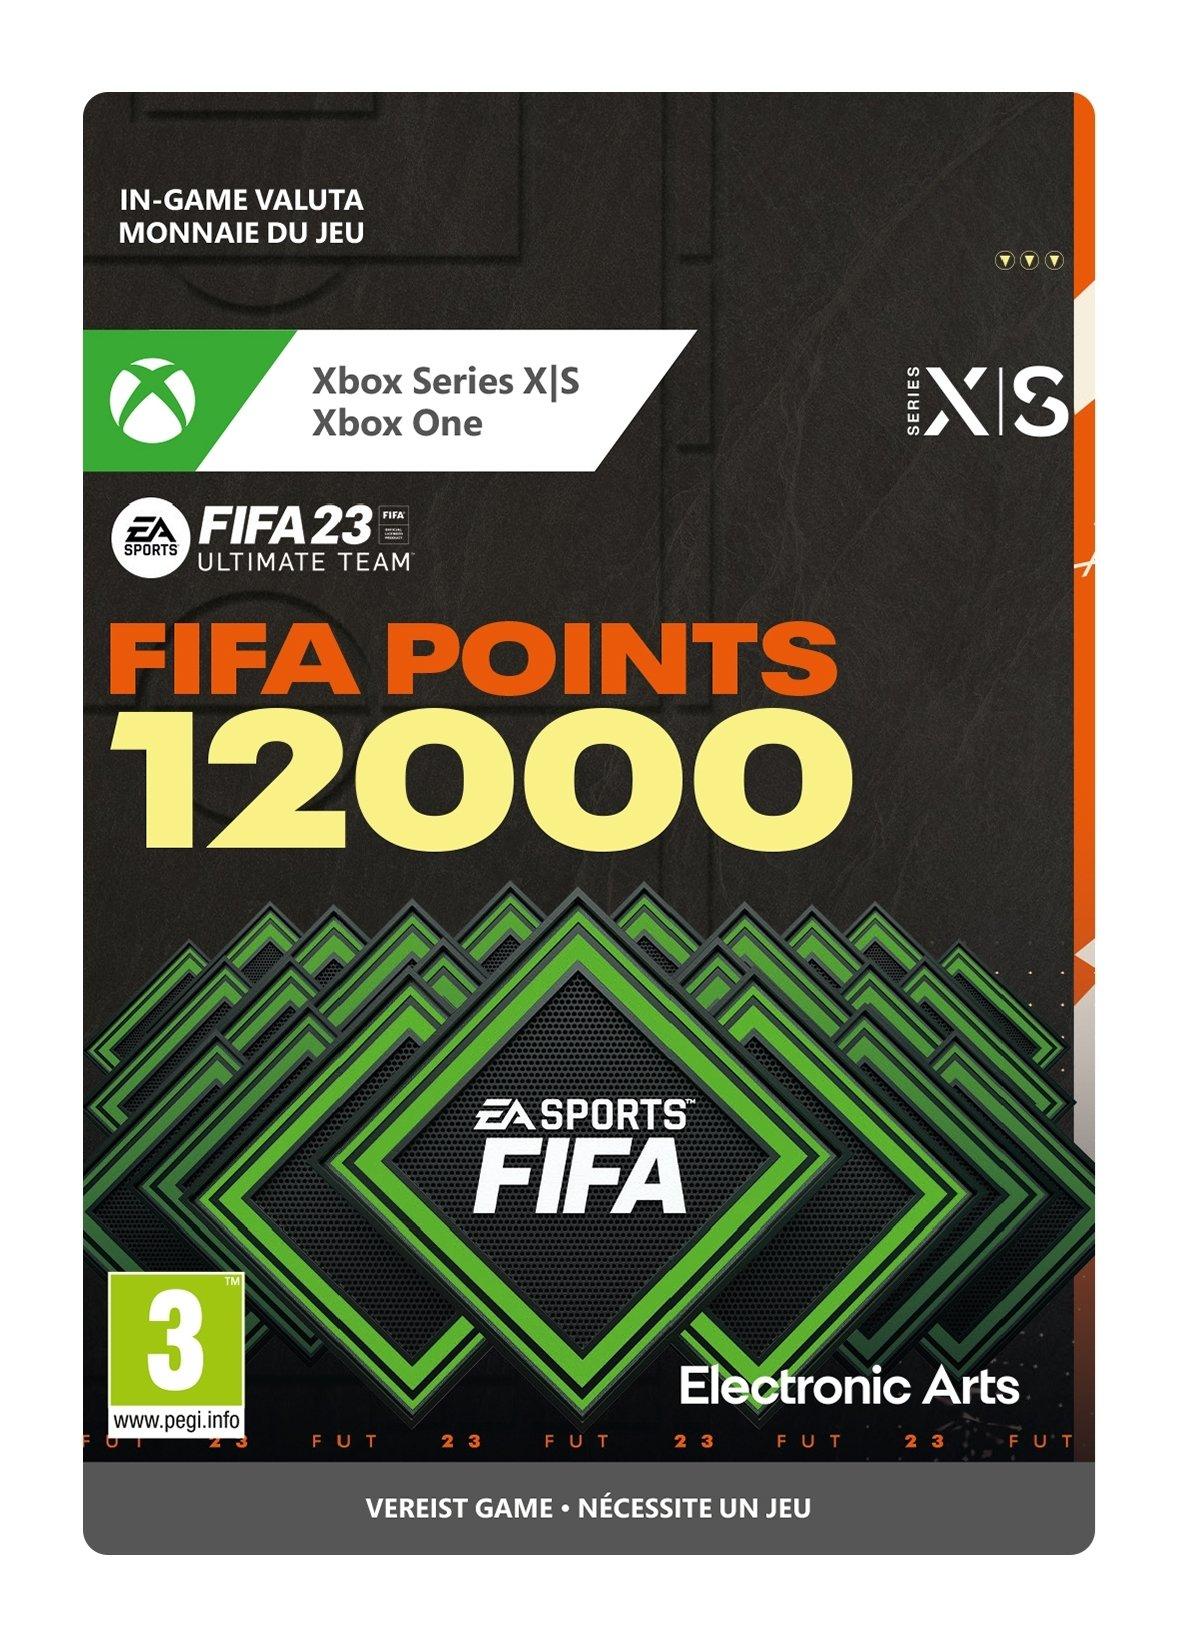 FIFA 23 - 12000 FIFA Points - Xbox Series X|S/ Xbox One - Currency - Niet beschikbaar in Belgie | 7F6-00461 (93864f26-f1af-424a-baf5-88d501e743b5)